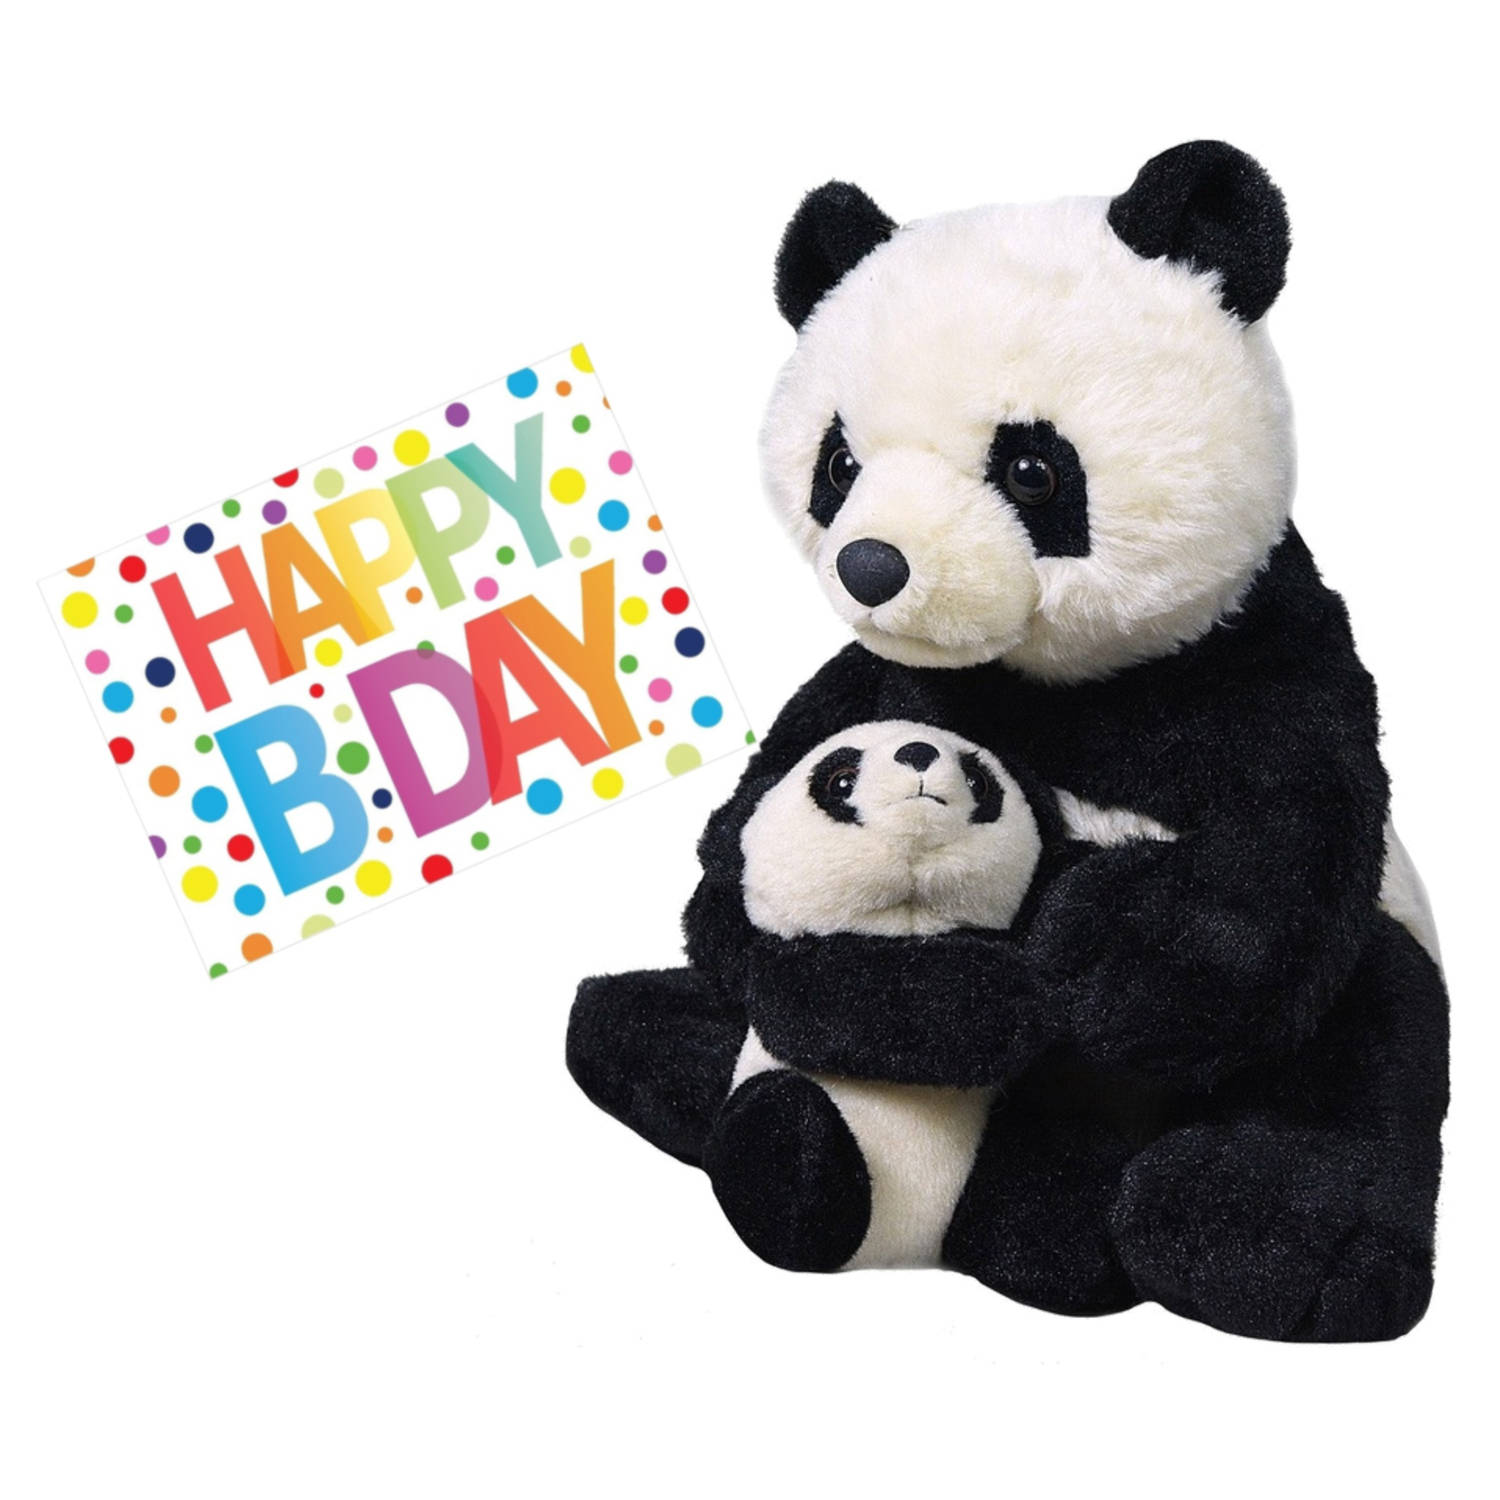 Pluche knuffel panda beer met baby 38 cm met A5-size Happy Birthday wenskaart Knuffeldier